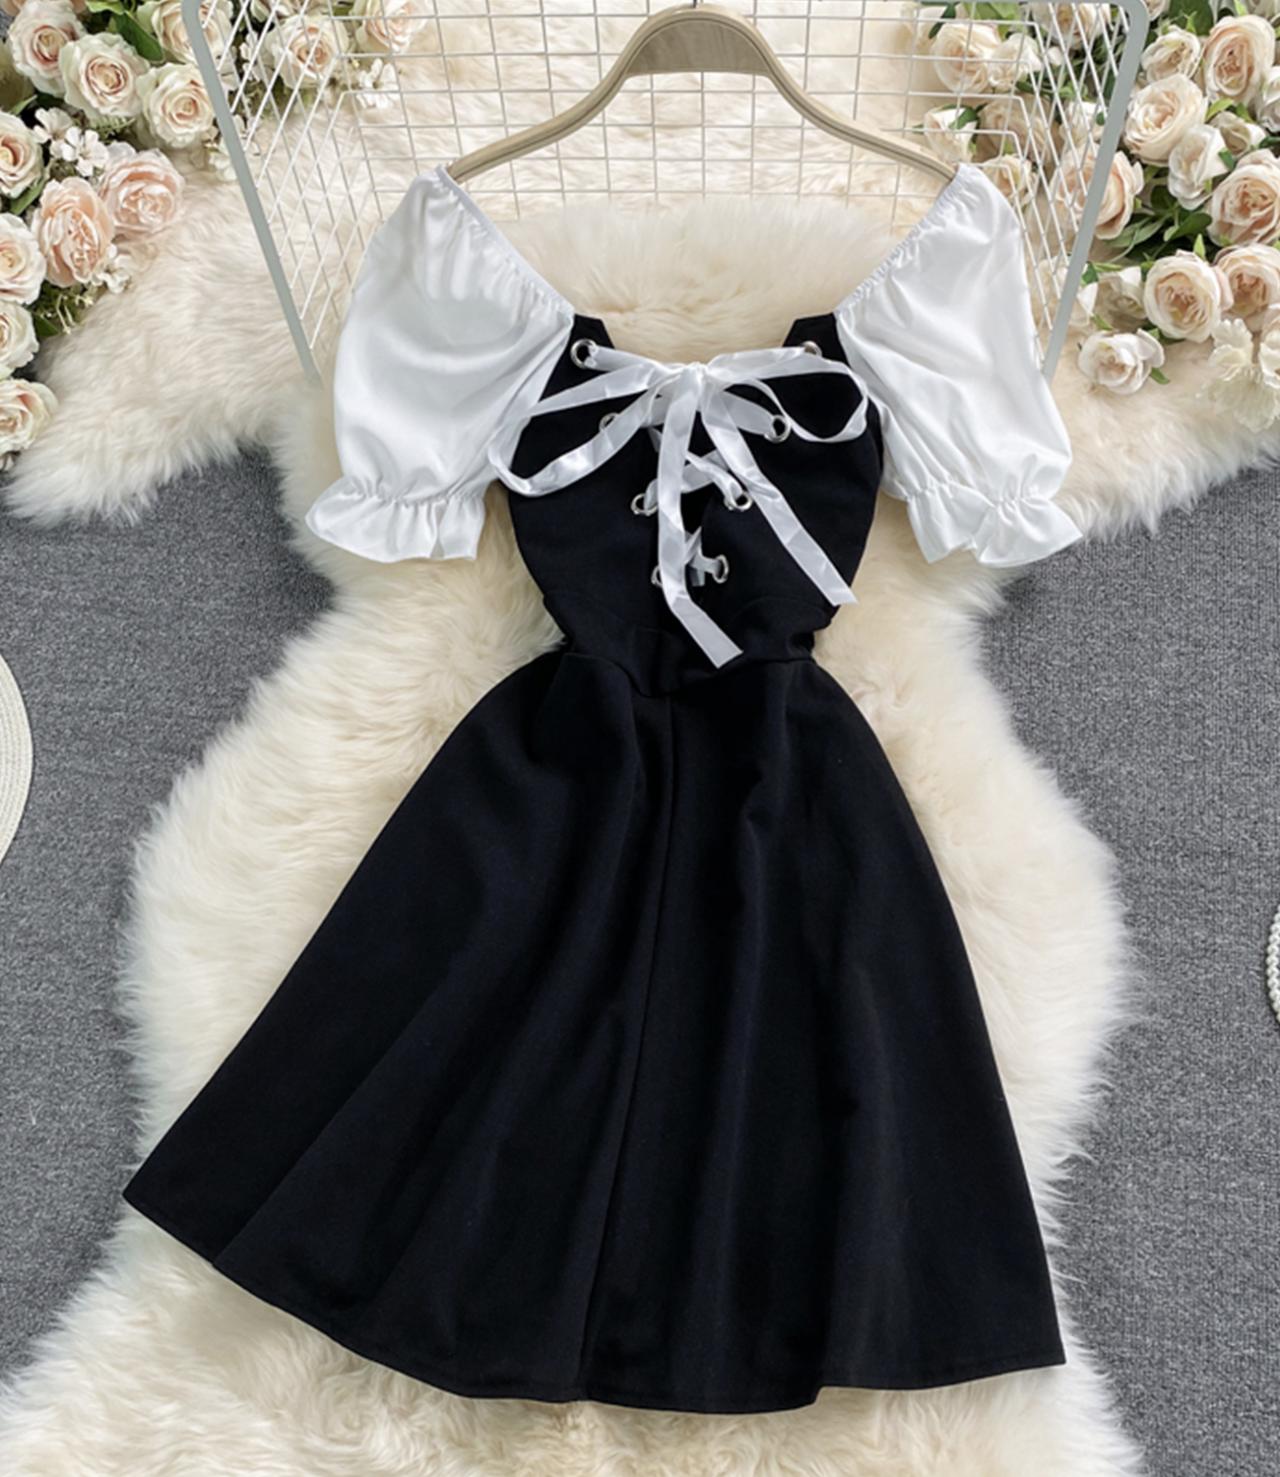 Cute Black And White Short Dress Fashion Dress